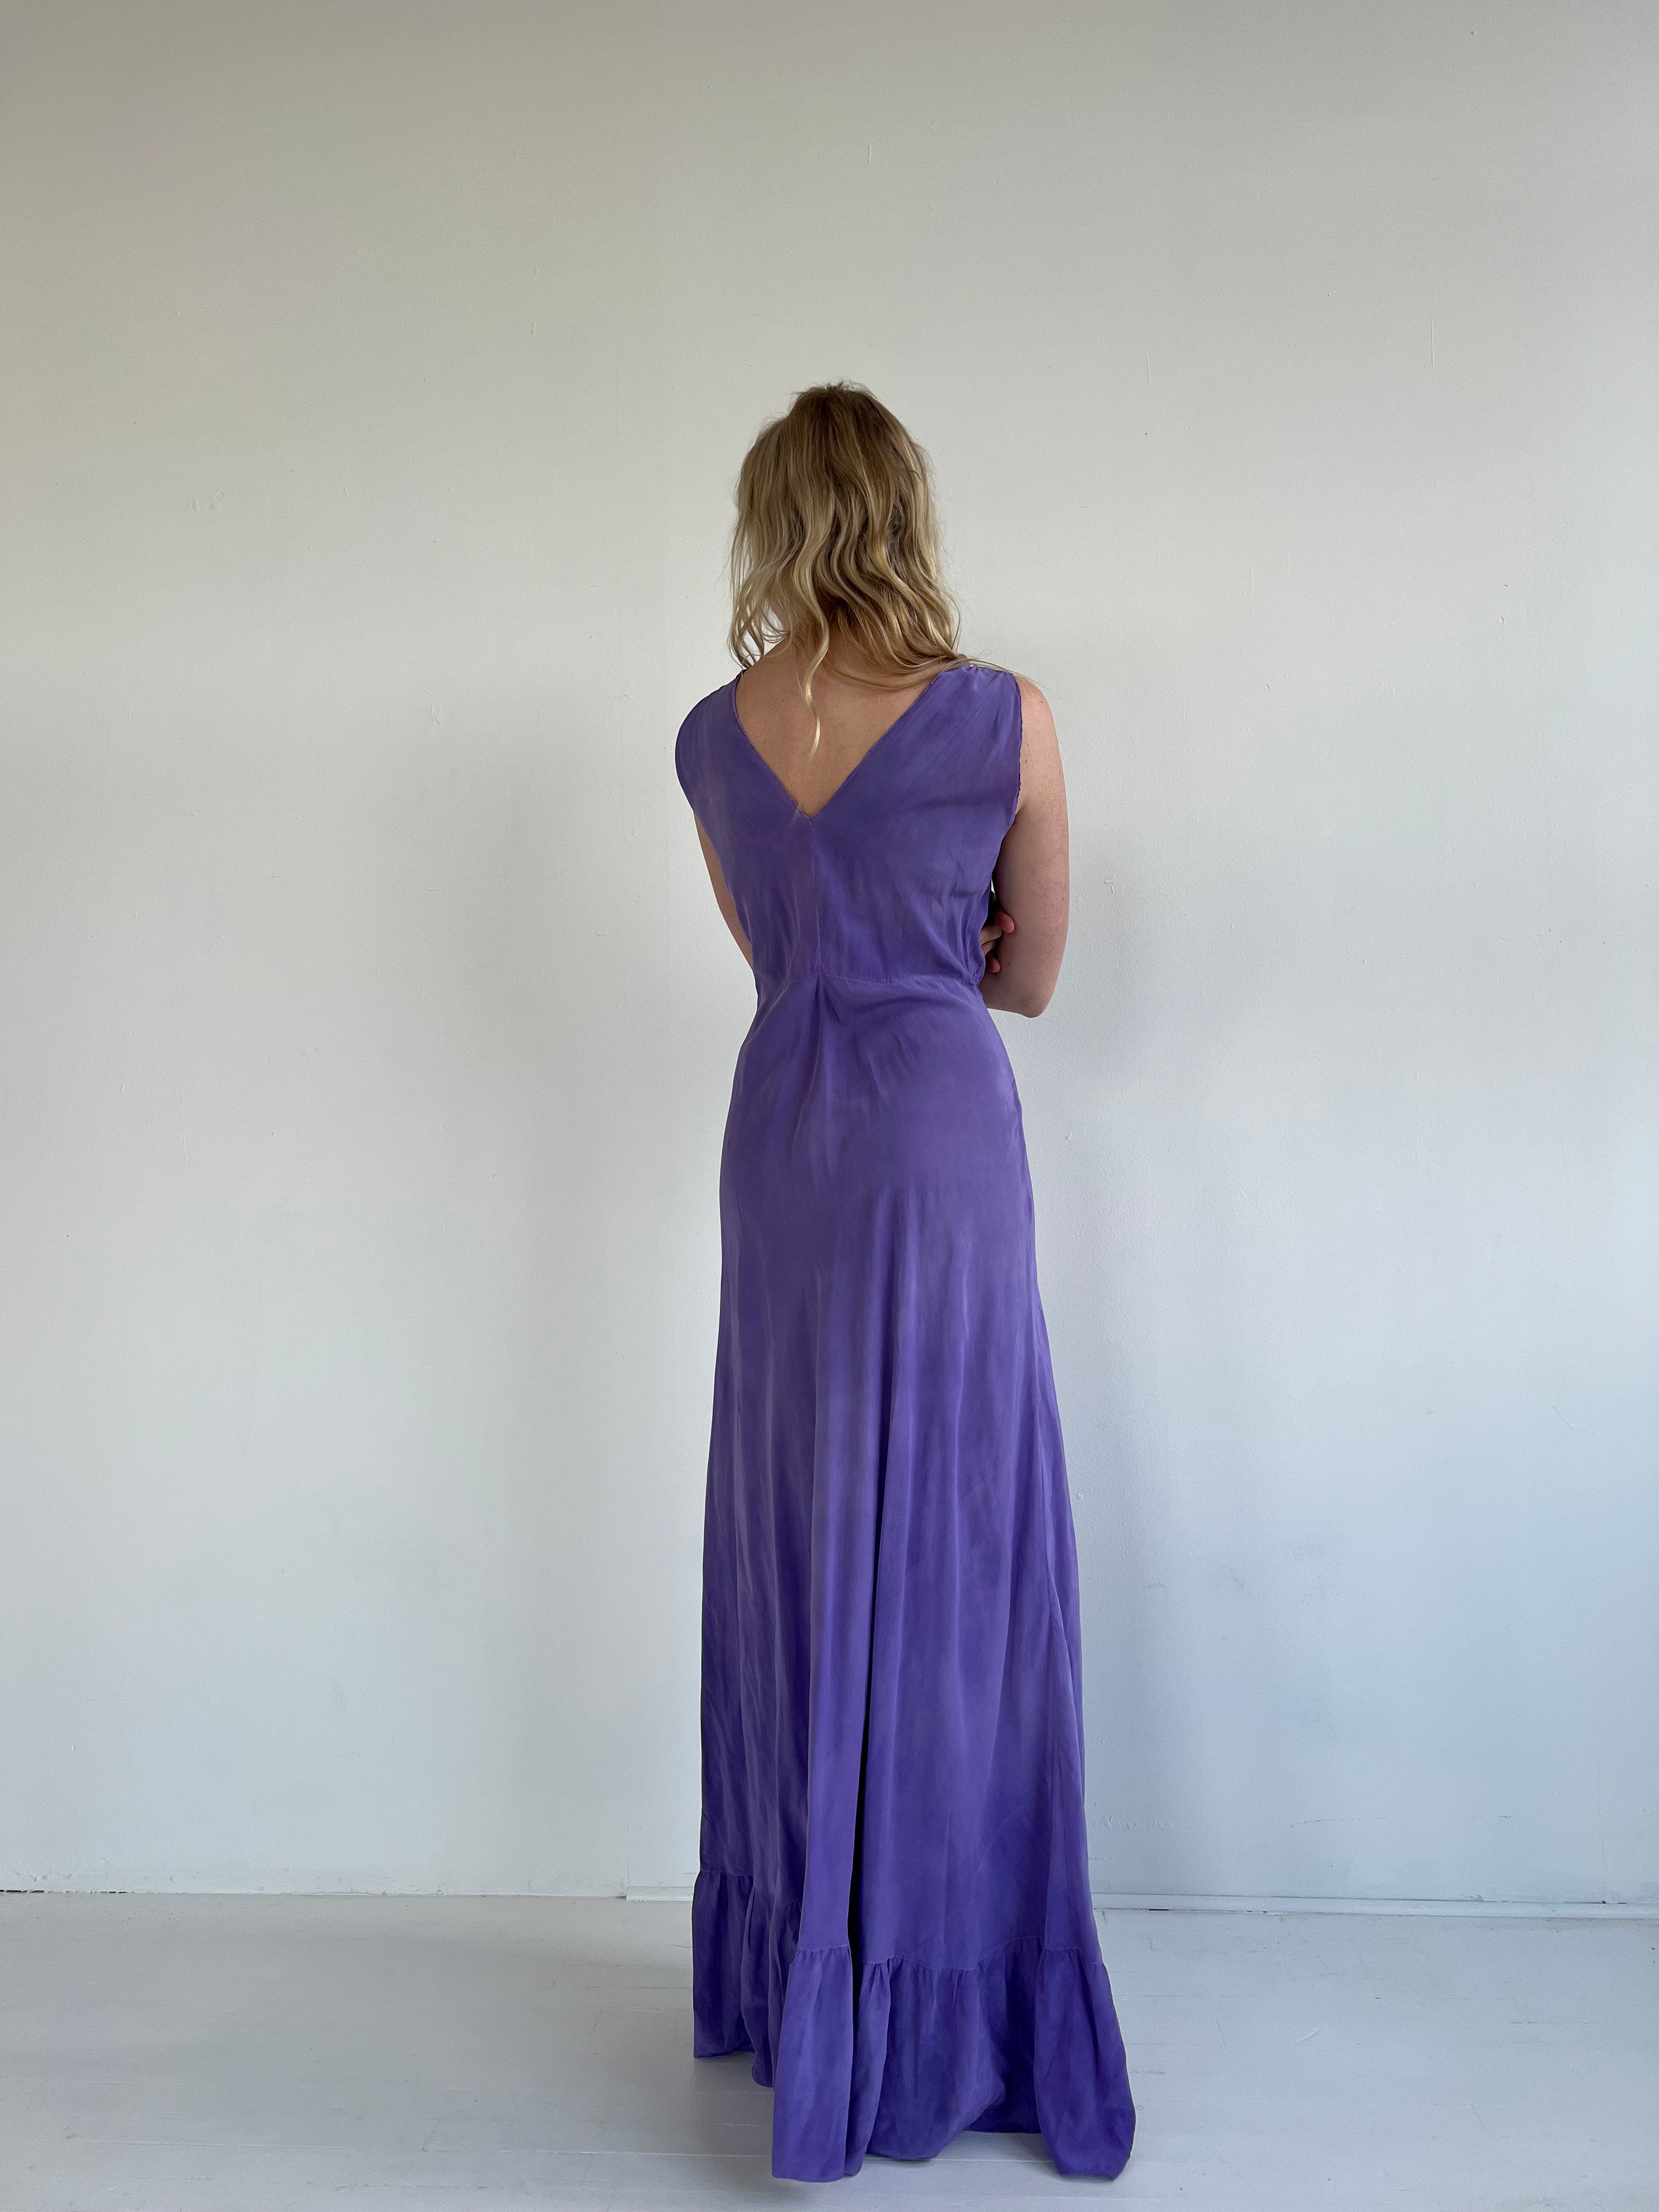 Hand Dyed Purple Silk Dress